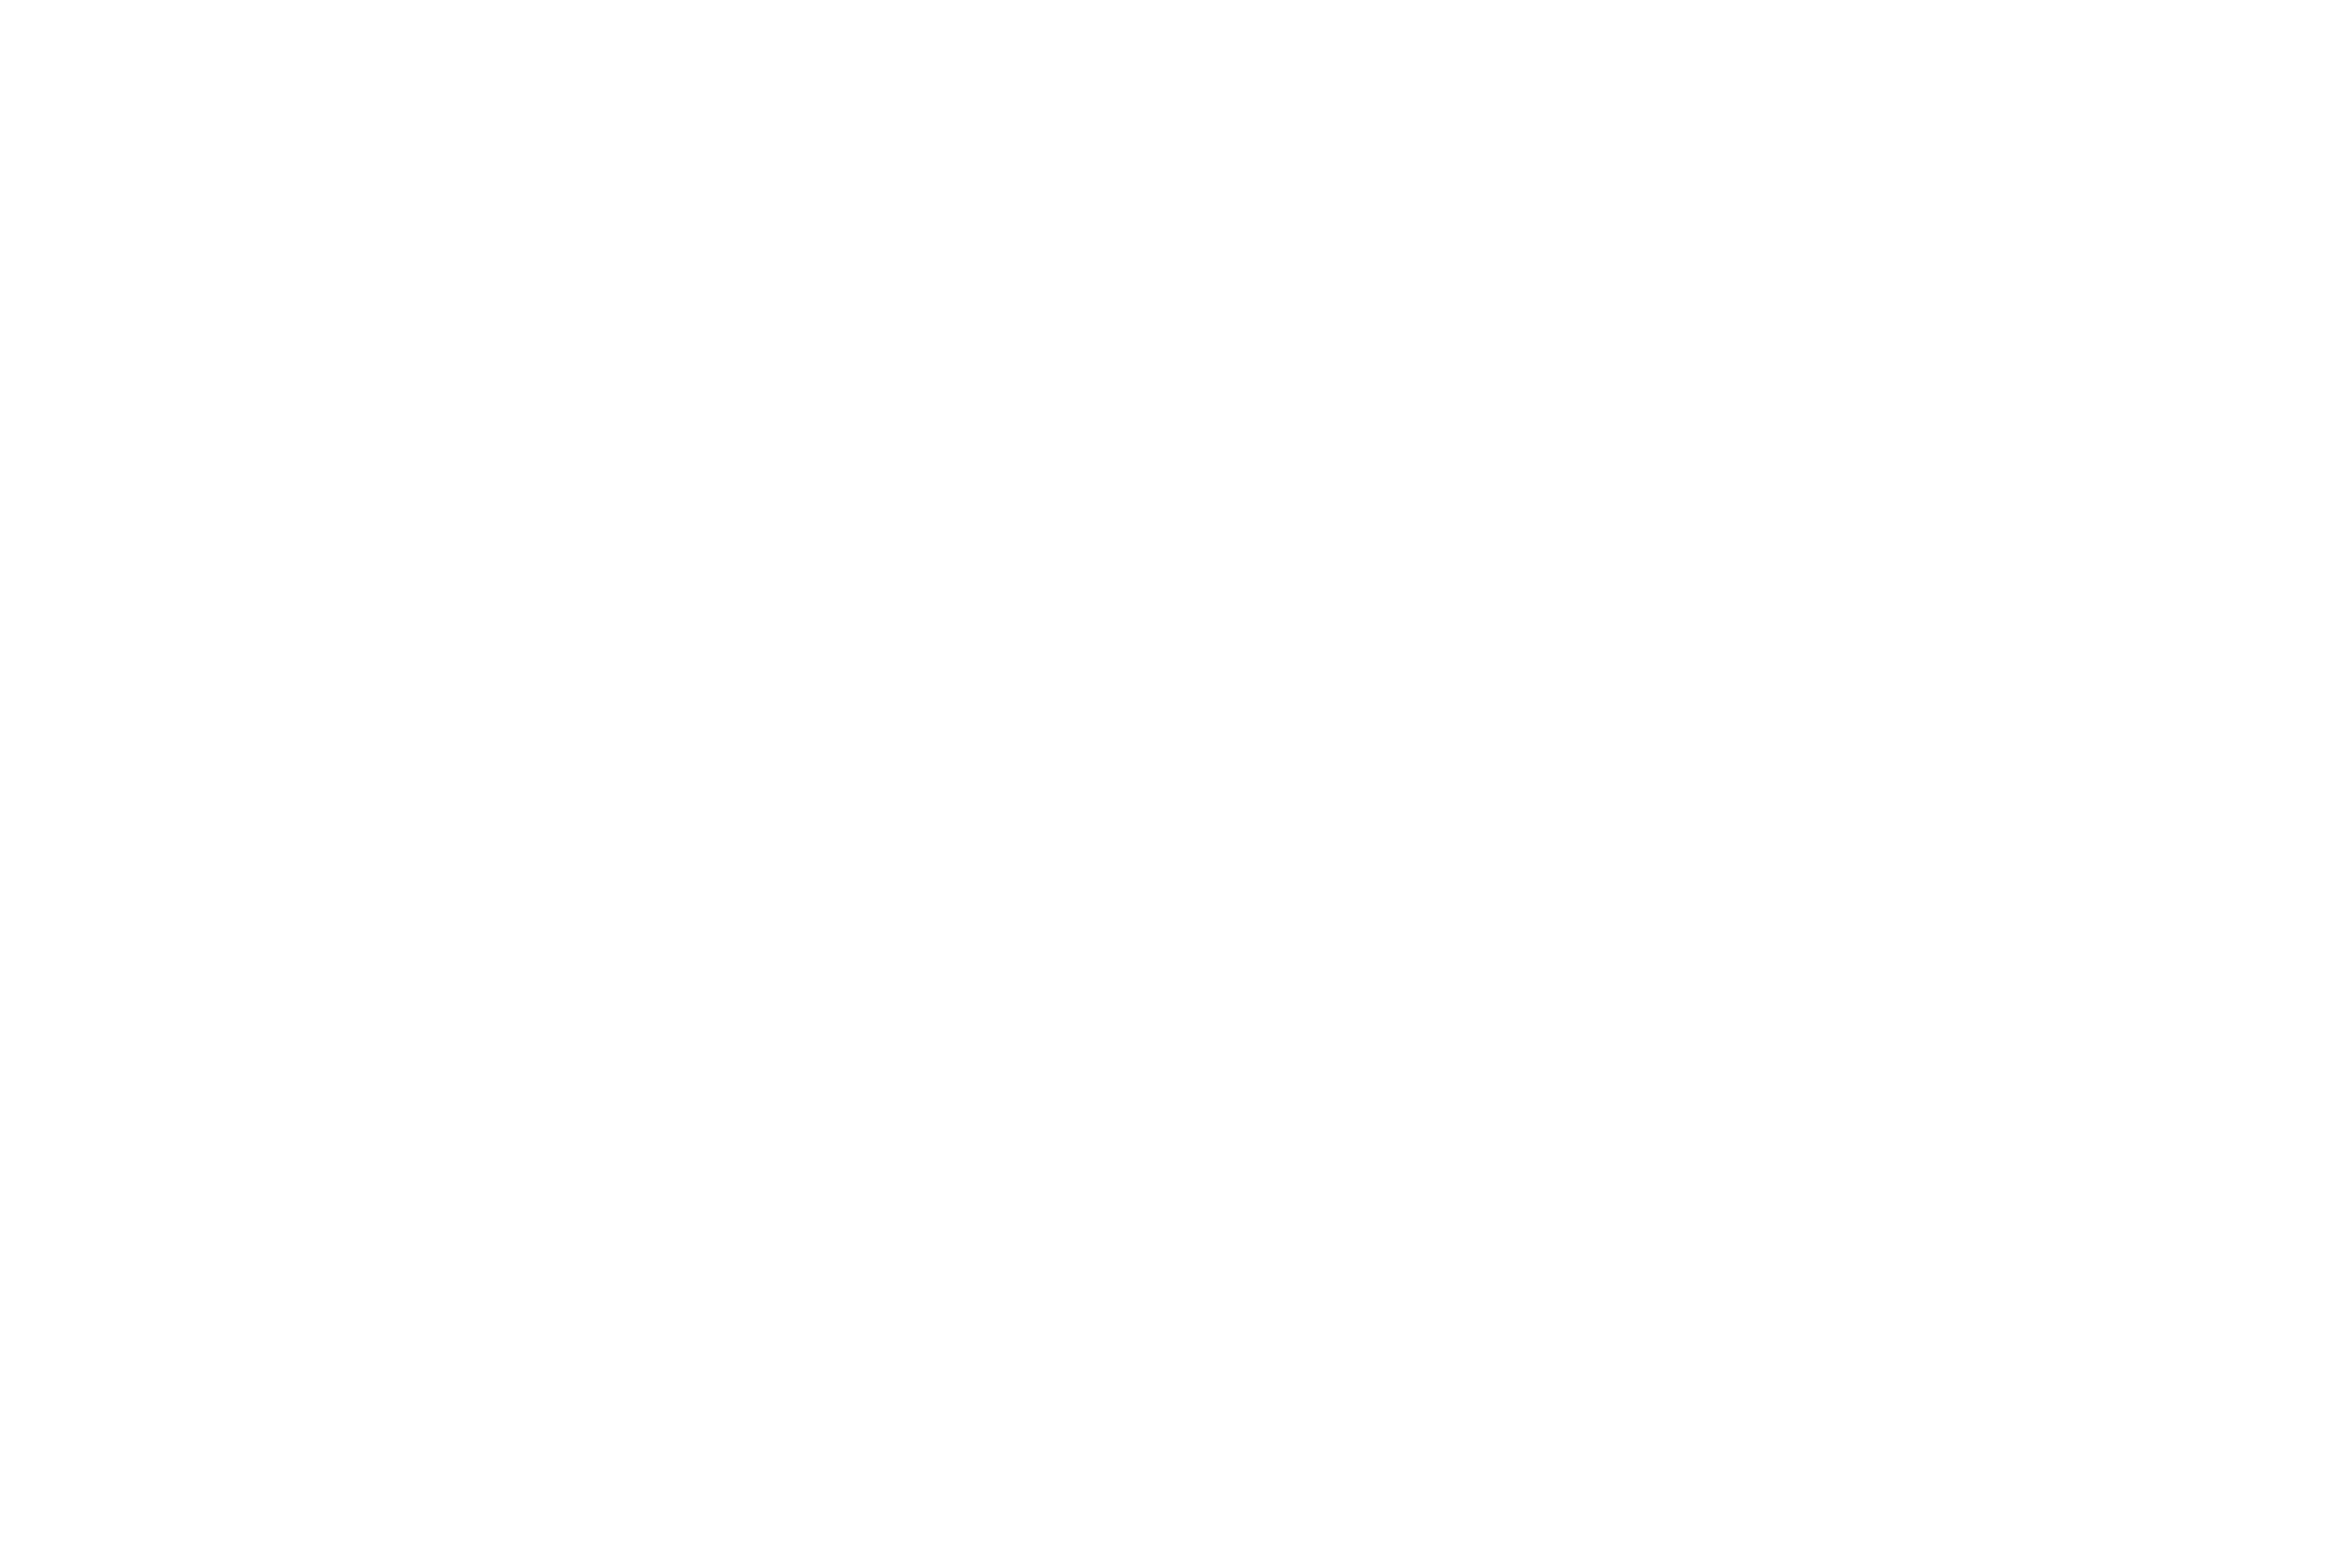 Morocco Kindgom of light